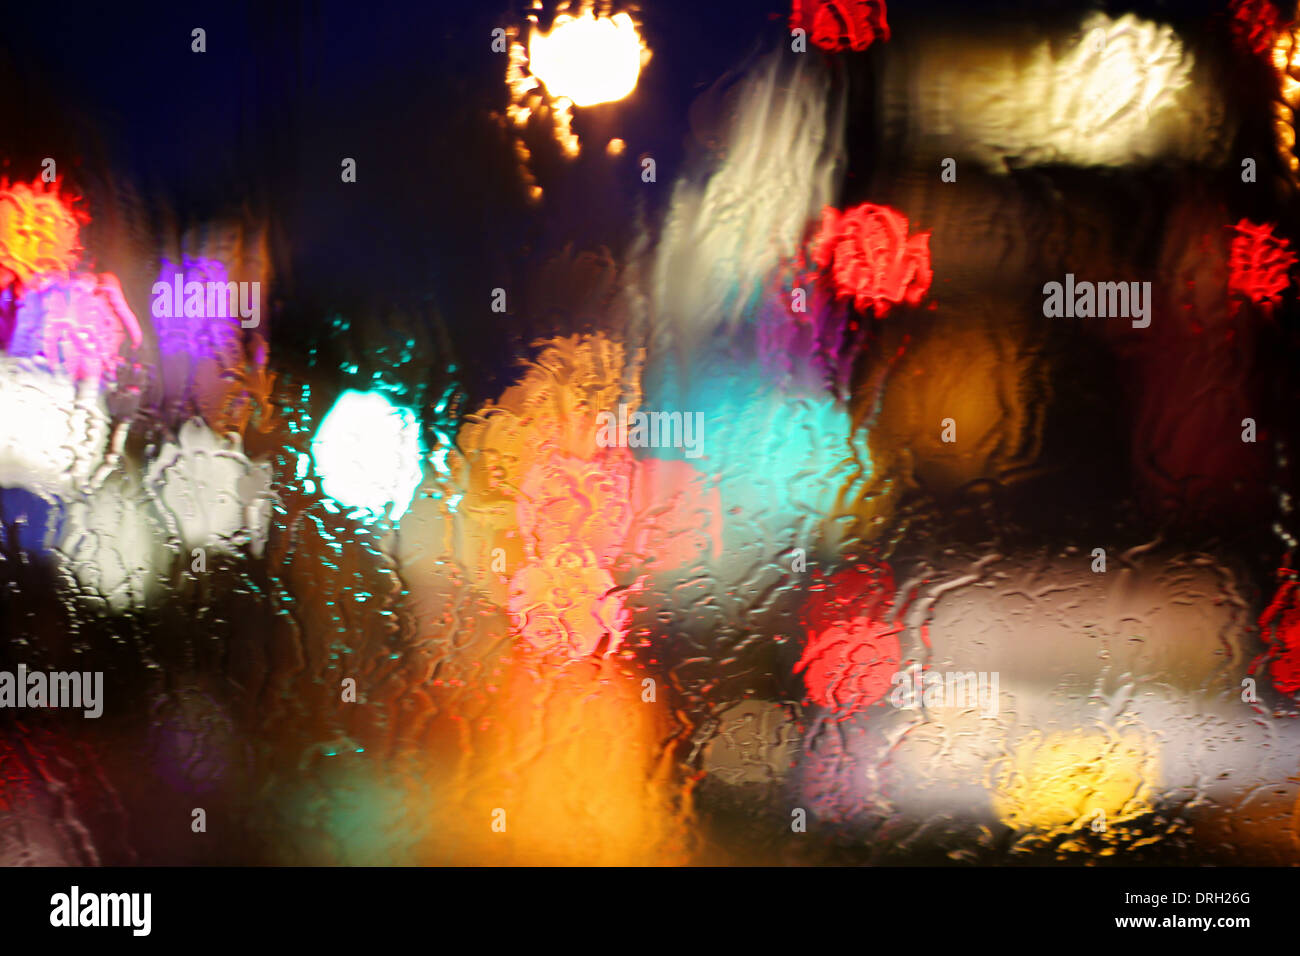 Lights taken through raindrops on glass at night Stock Photo